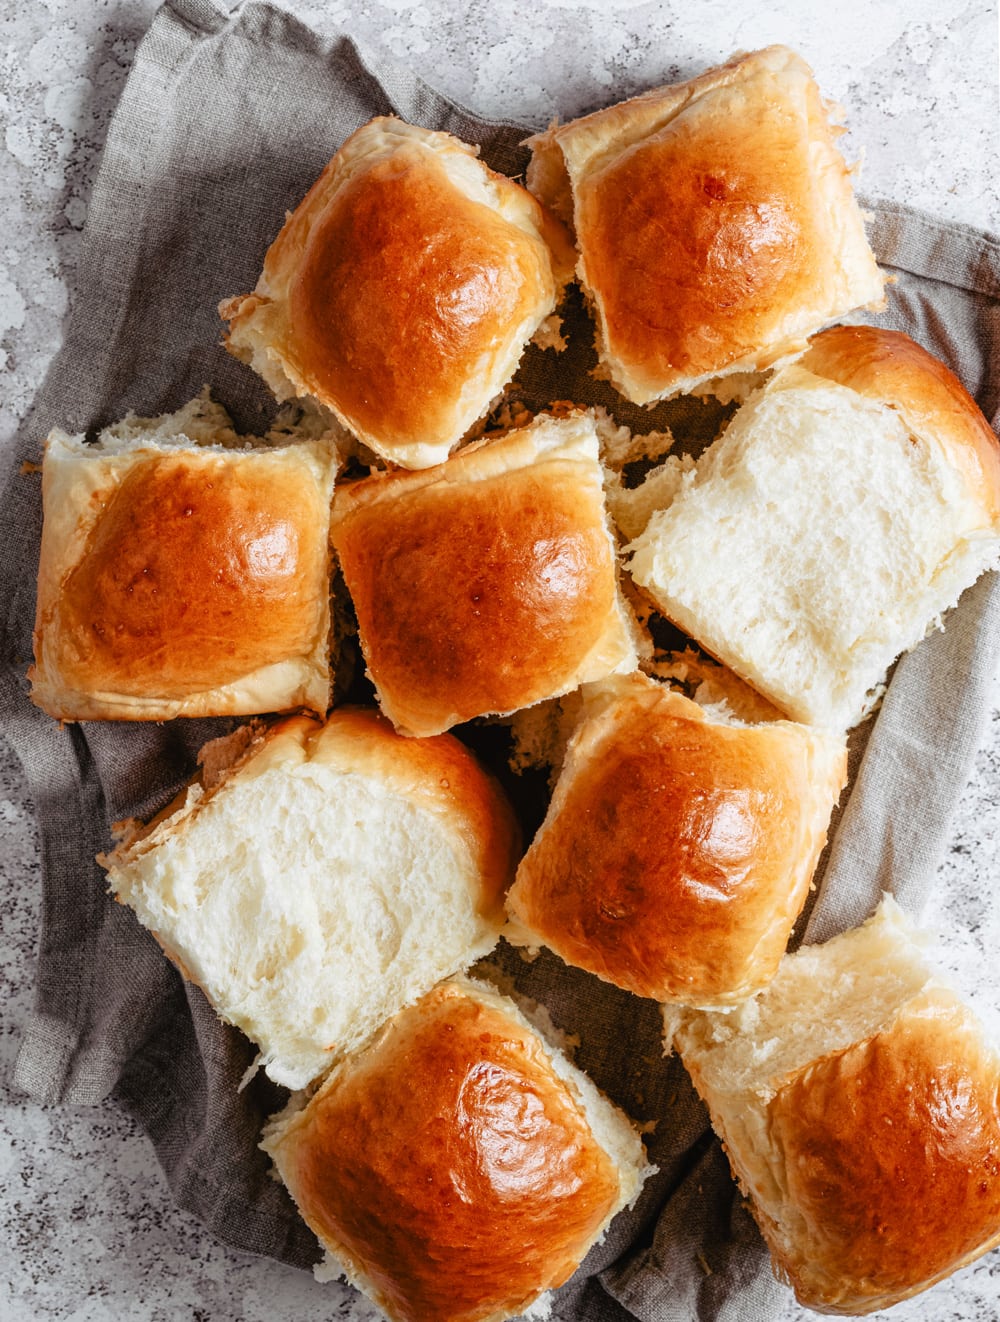 NOLA-Style French Bread Rolls Recipe